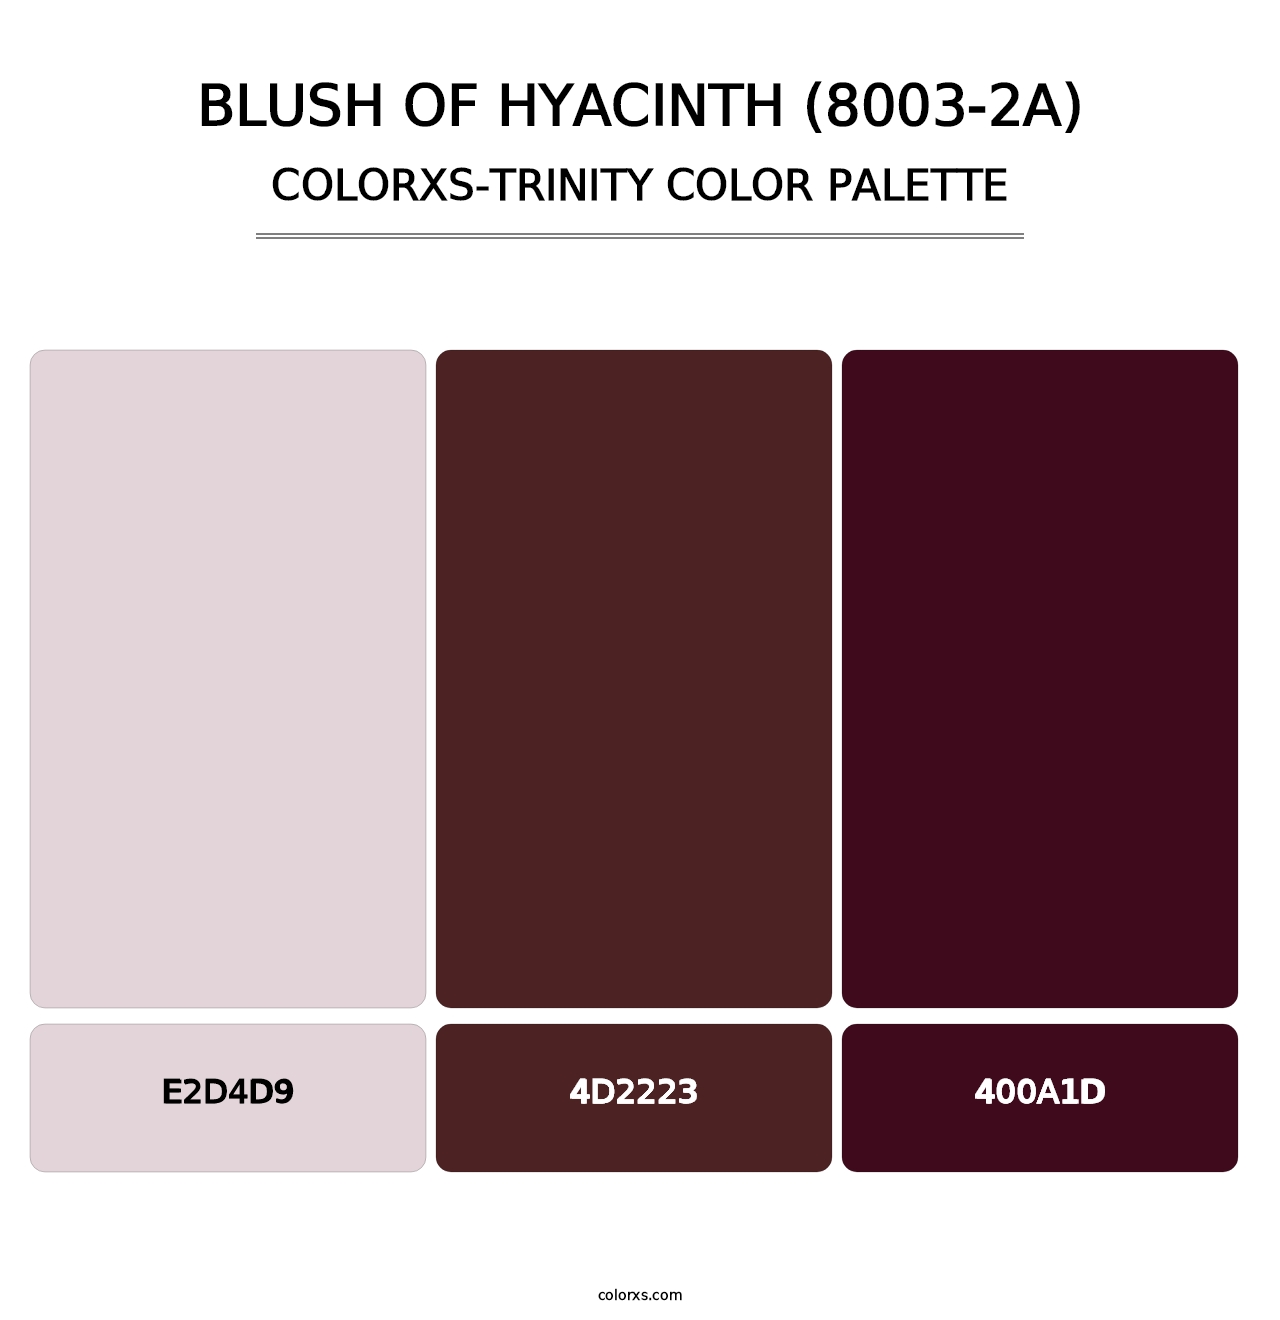 Blush of Hyacinth (8003-2A) - Colorxs Trinity Palette